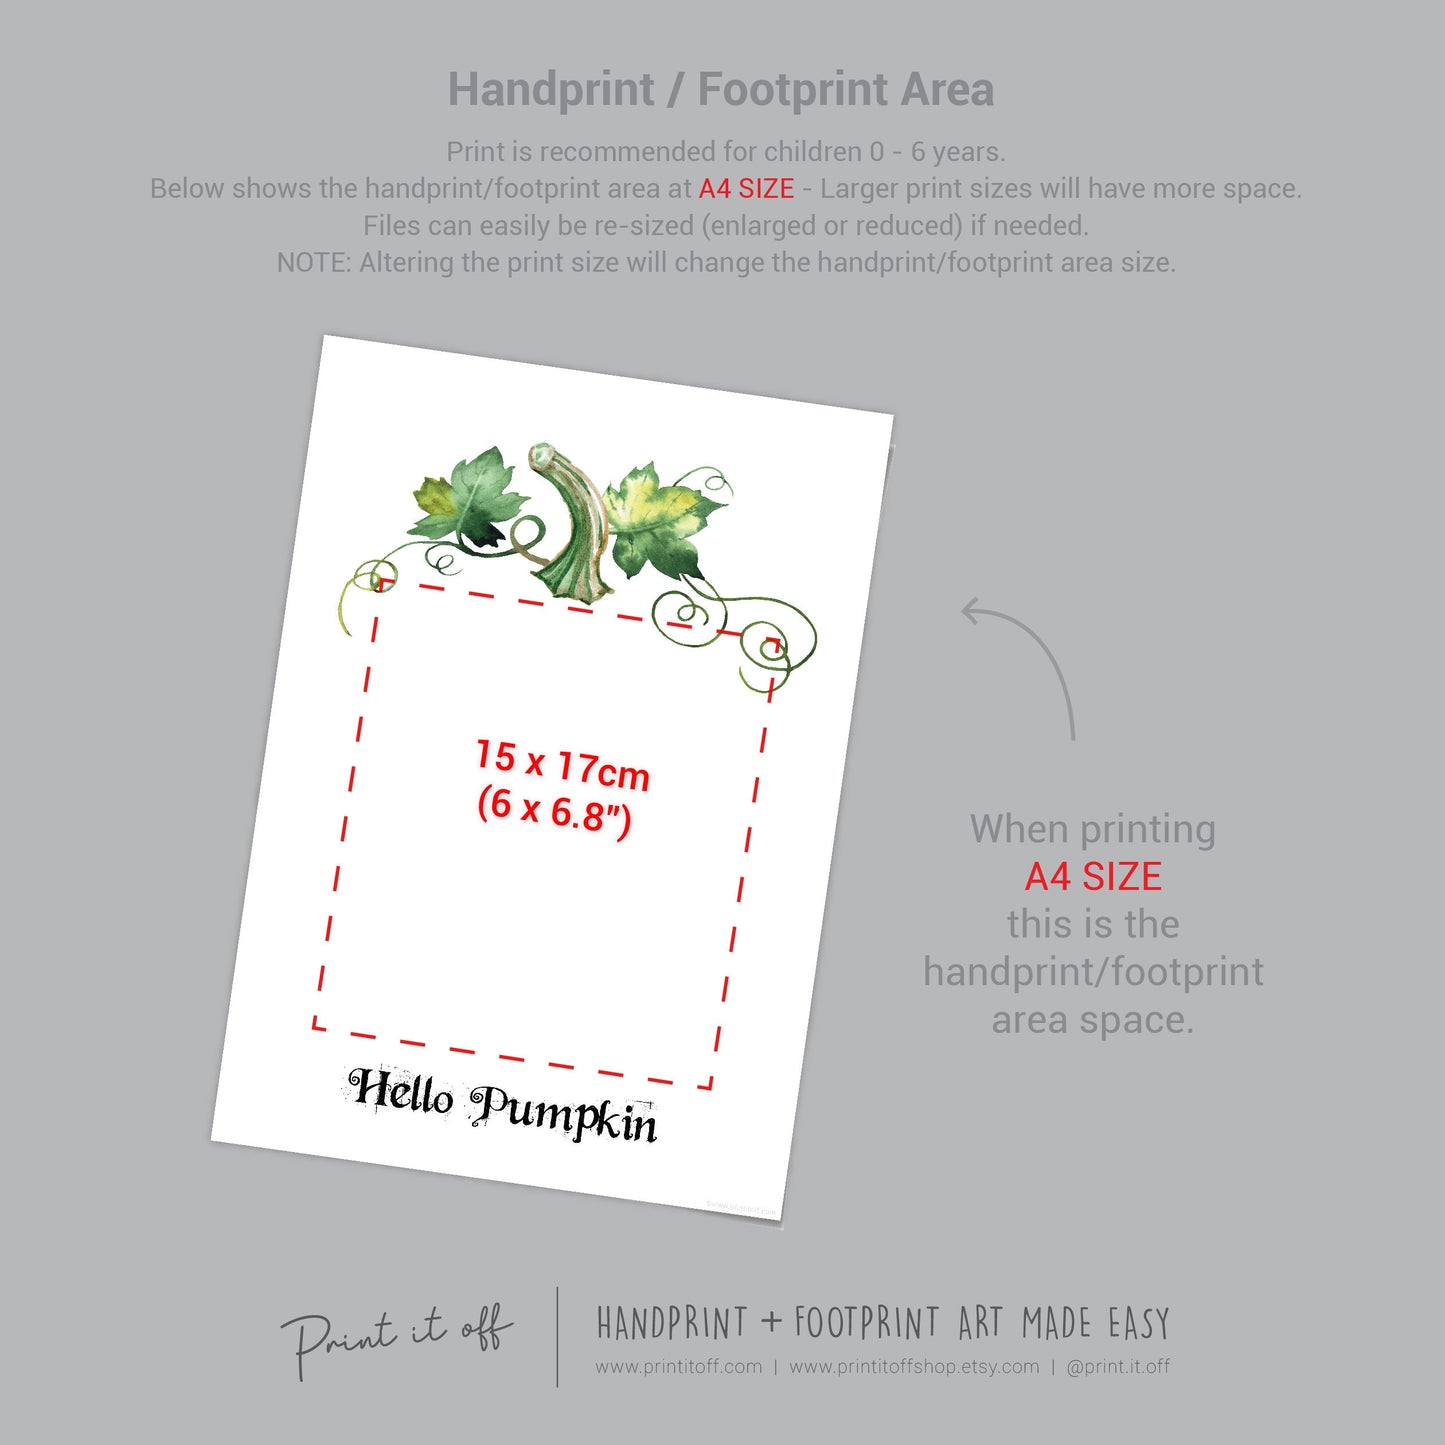 Hello Pumpkin Footprint Handprint Foot Hand Halloween Art Craft / Kids Toddler Baby DIY Memory Activity / Print It Off